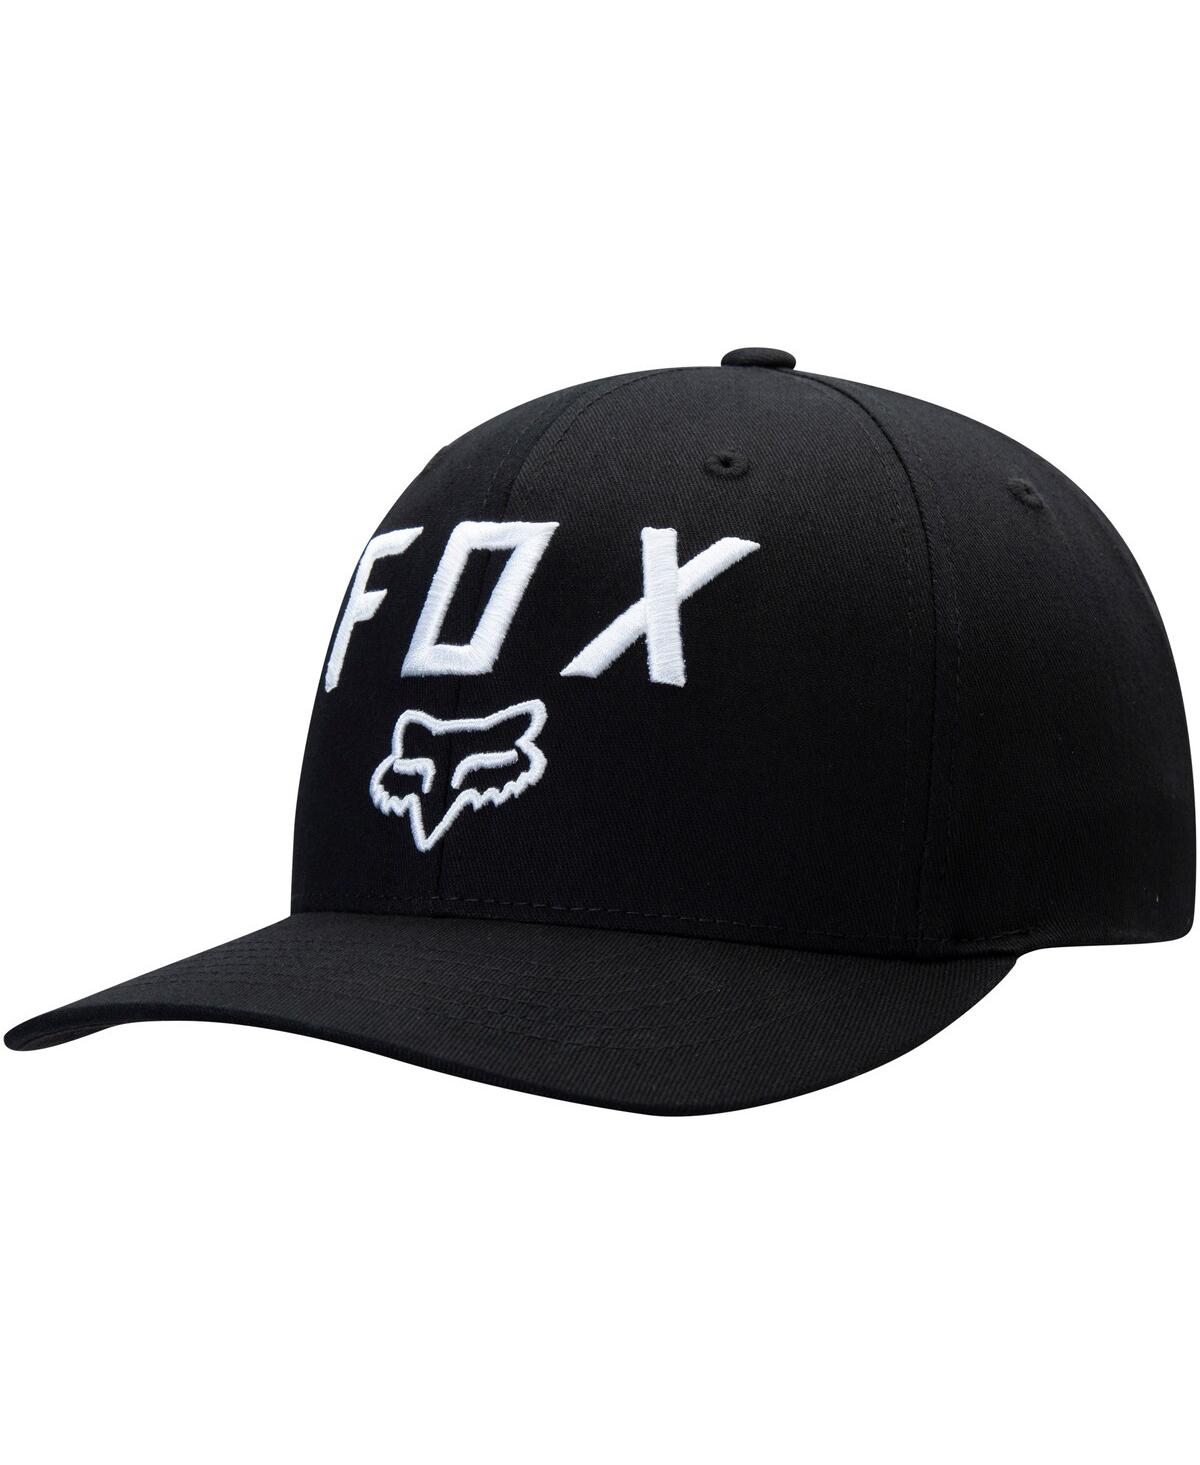 Men's Fox Black Legacy Moth 110 Snapback Adjustable Hat - Black